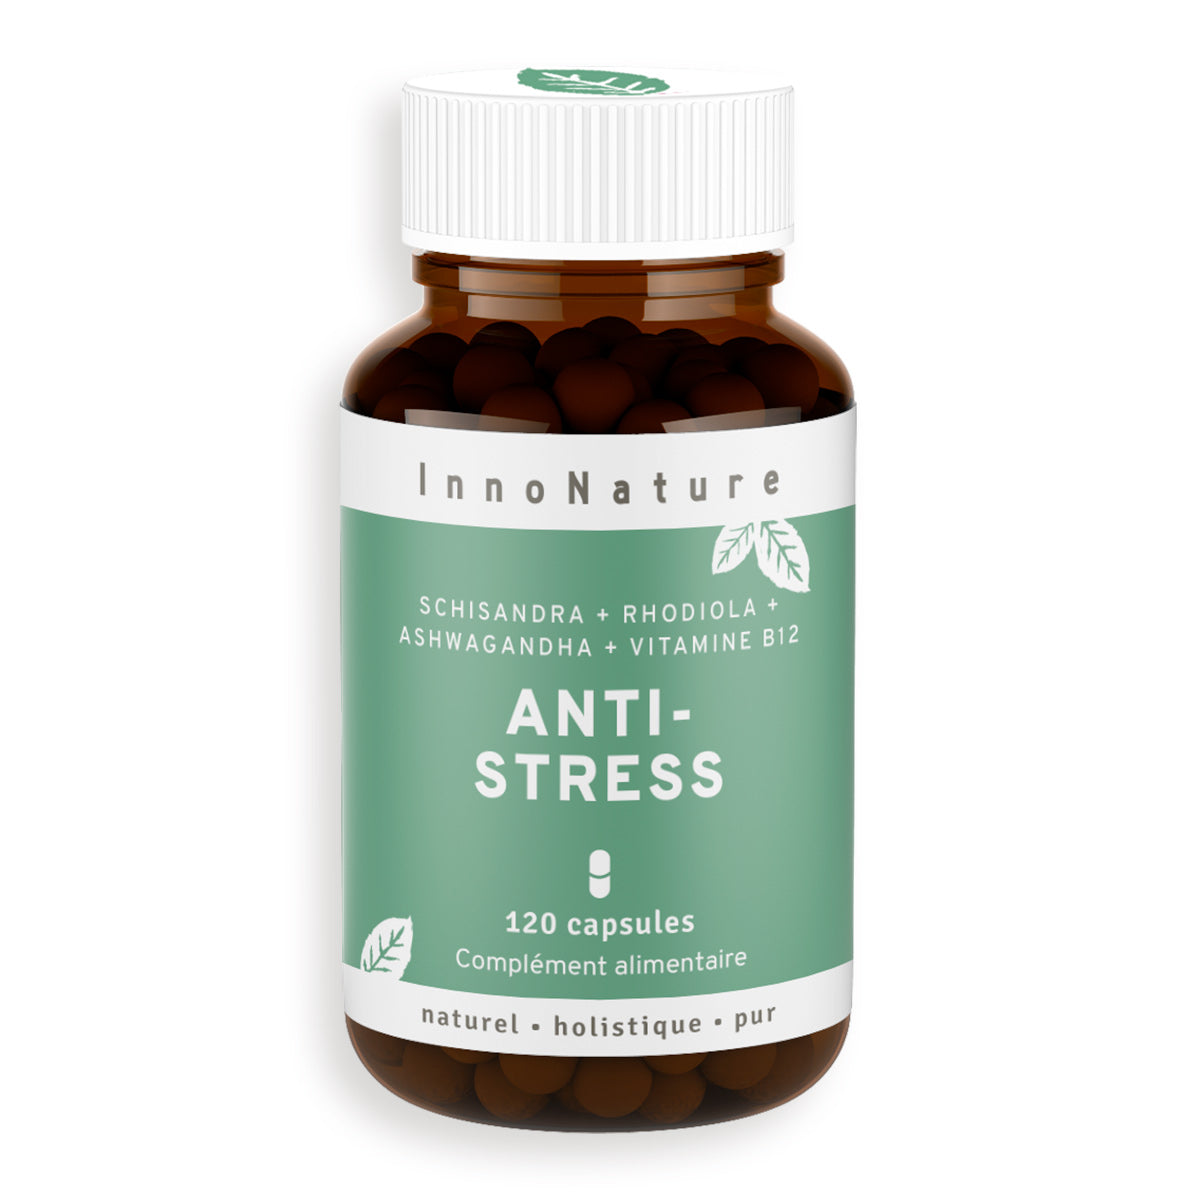 Capsules Anti-Stress : Schisandra, rhodiola, ashwagandha, vitamine B12